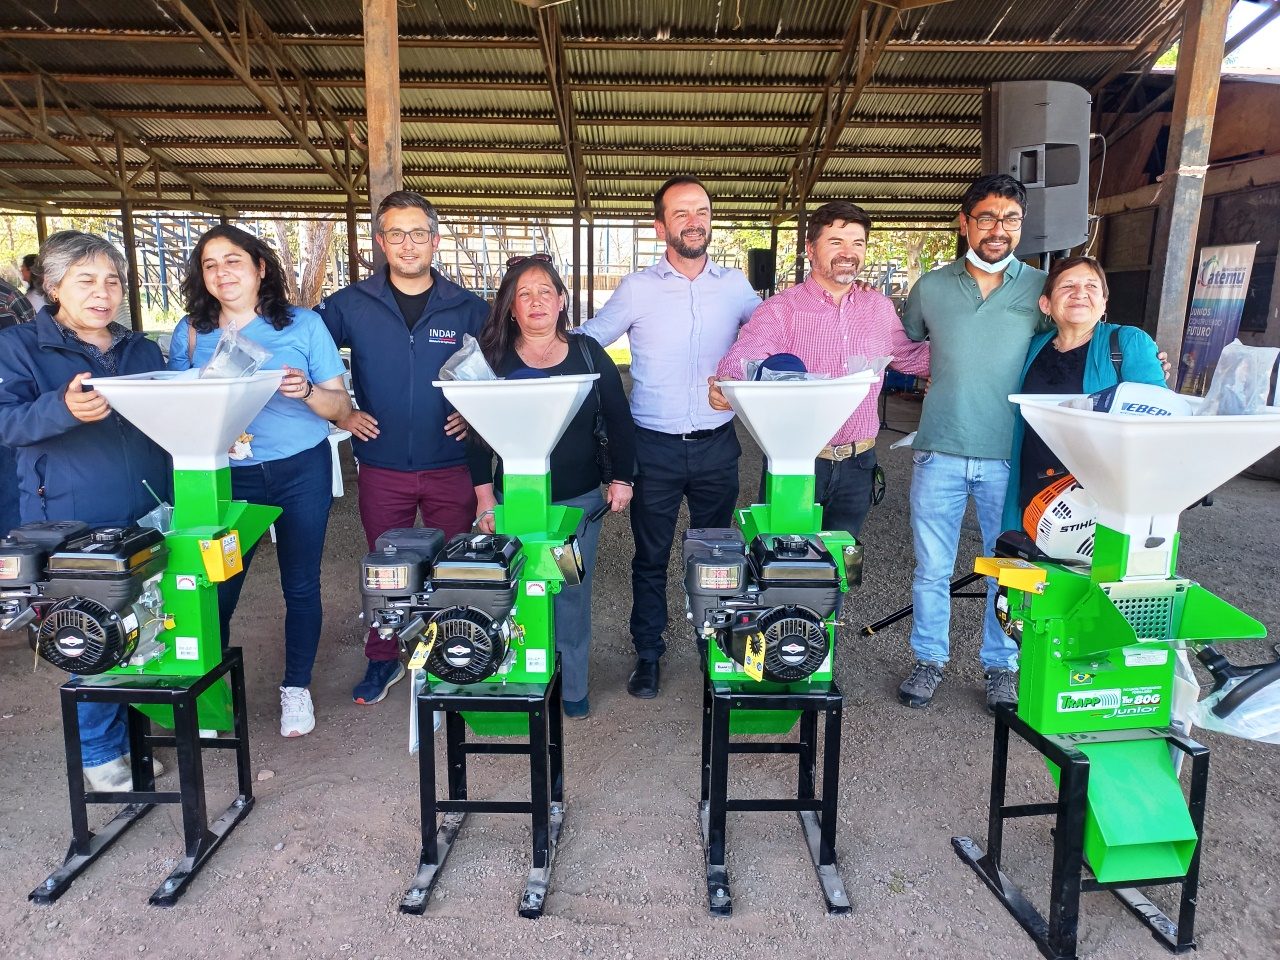 CATEMU: INDAP entrega maquinaria e infraestructura agrícola a campesinas y campesinos de Catemu